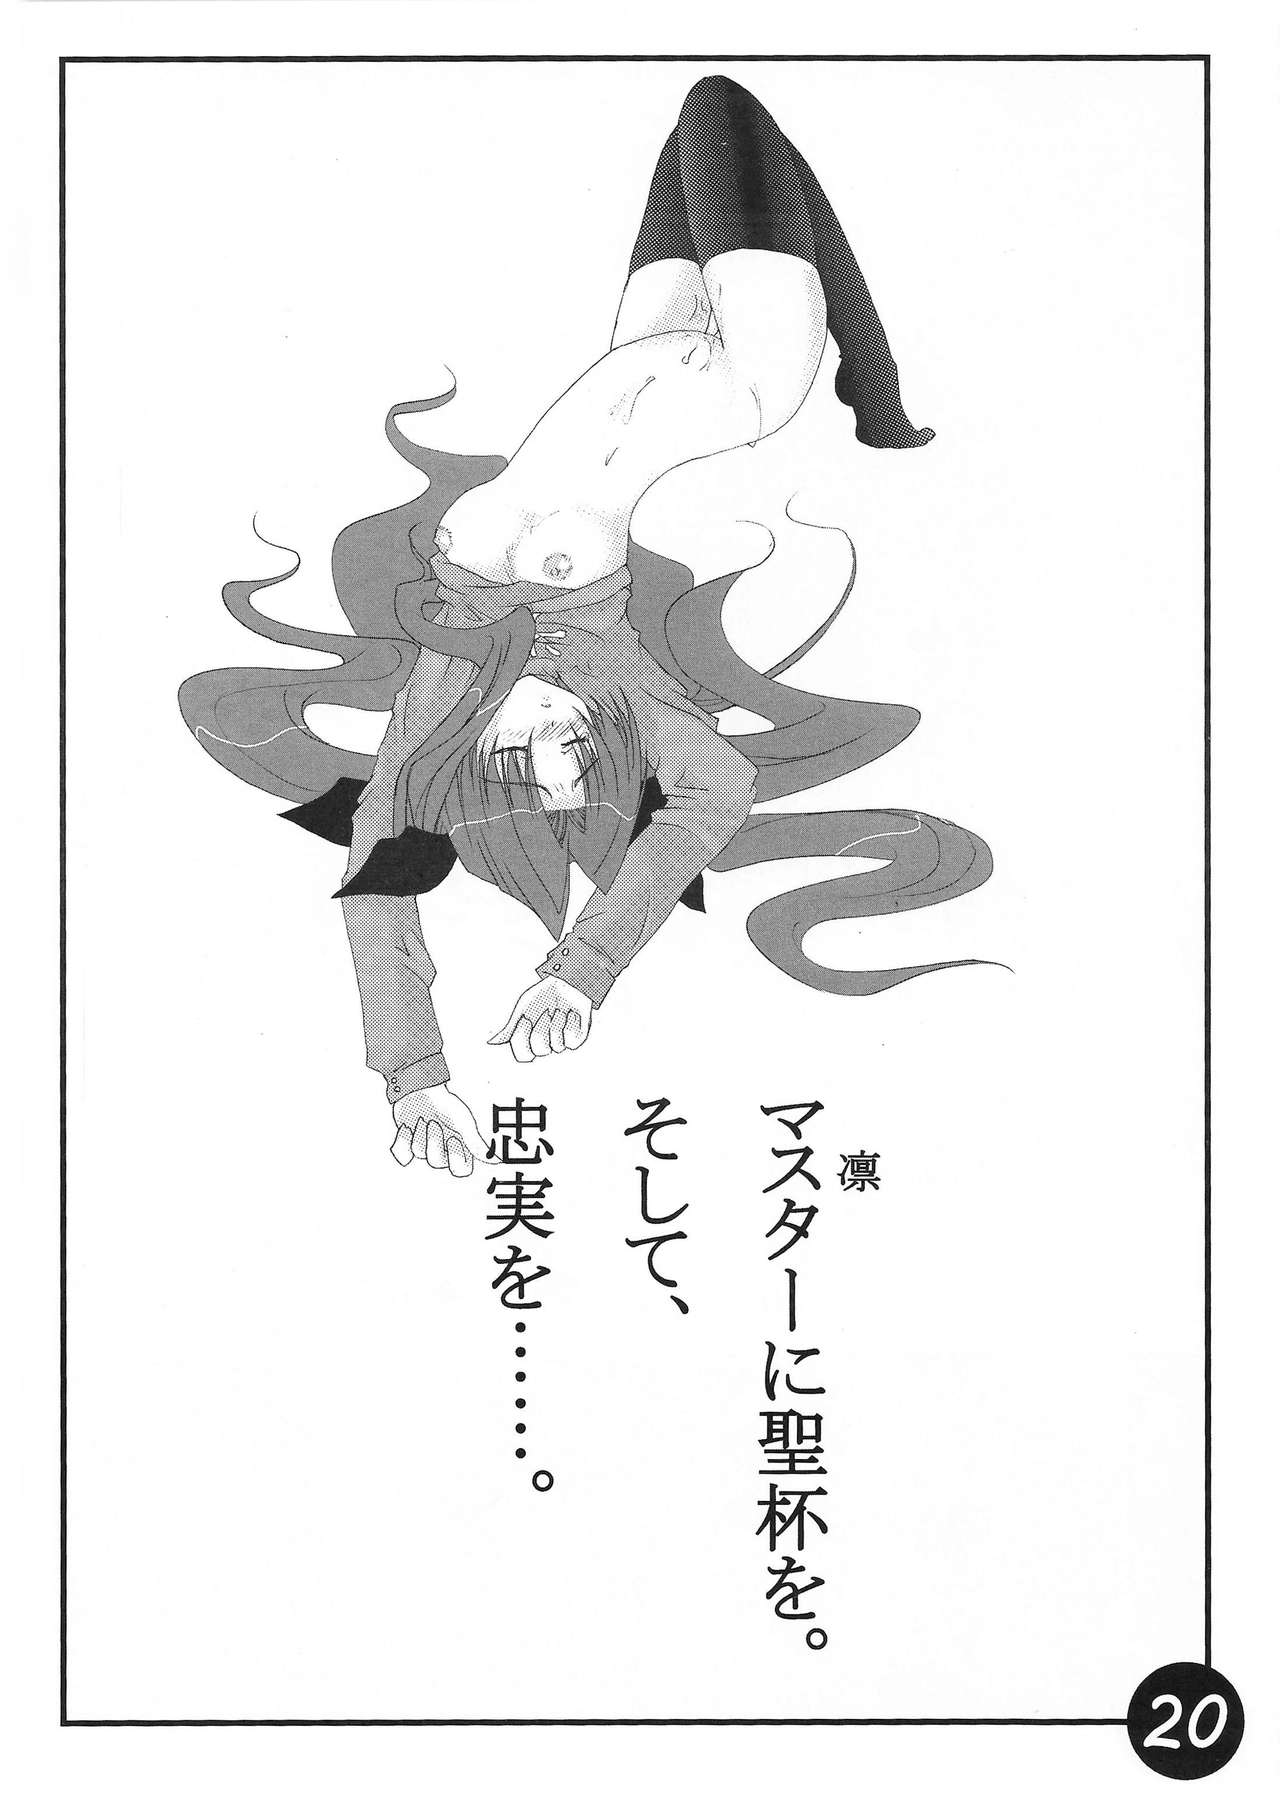 (SC25) [CS205 (Kineya Emuko)] CATHARSIS (Fate/stay night) (サンクリ25)  [CS205 (キネヤエムコ)] CATHARSIS (Fate/stay night)